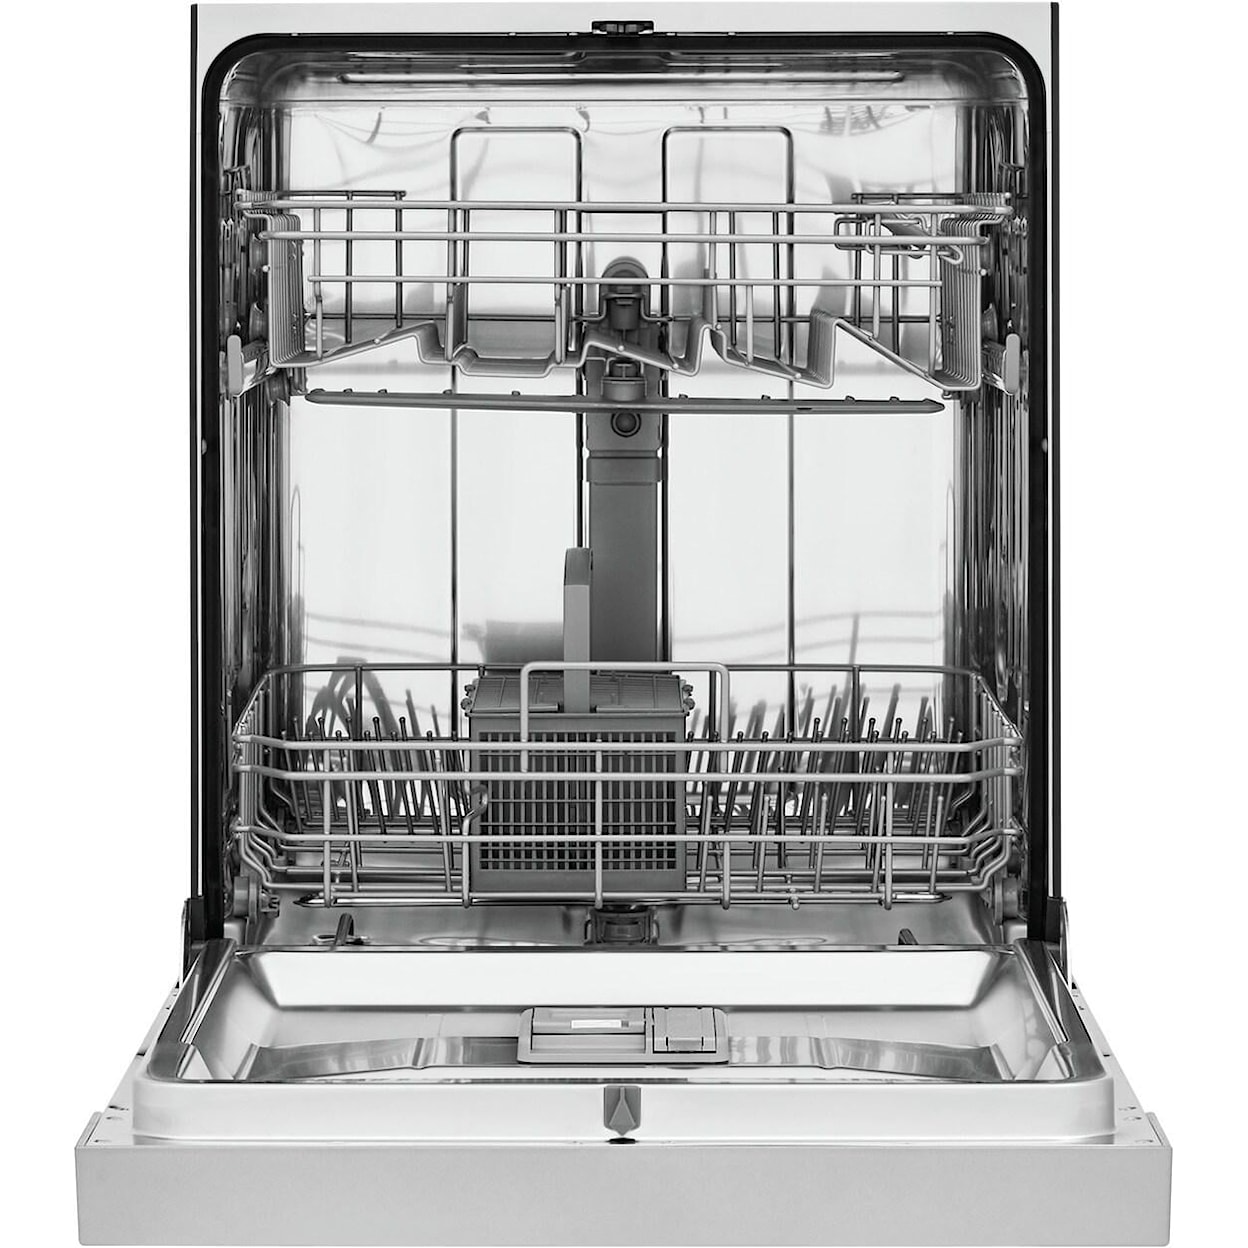 Frigidaire Dishwashers Built In Dishwasher - Stainless